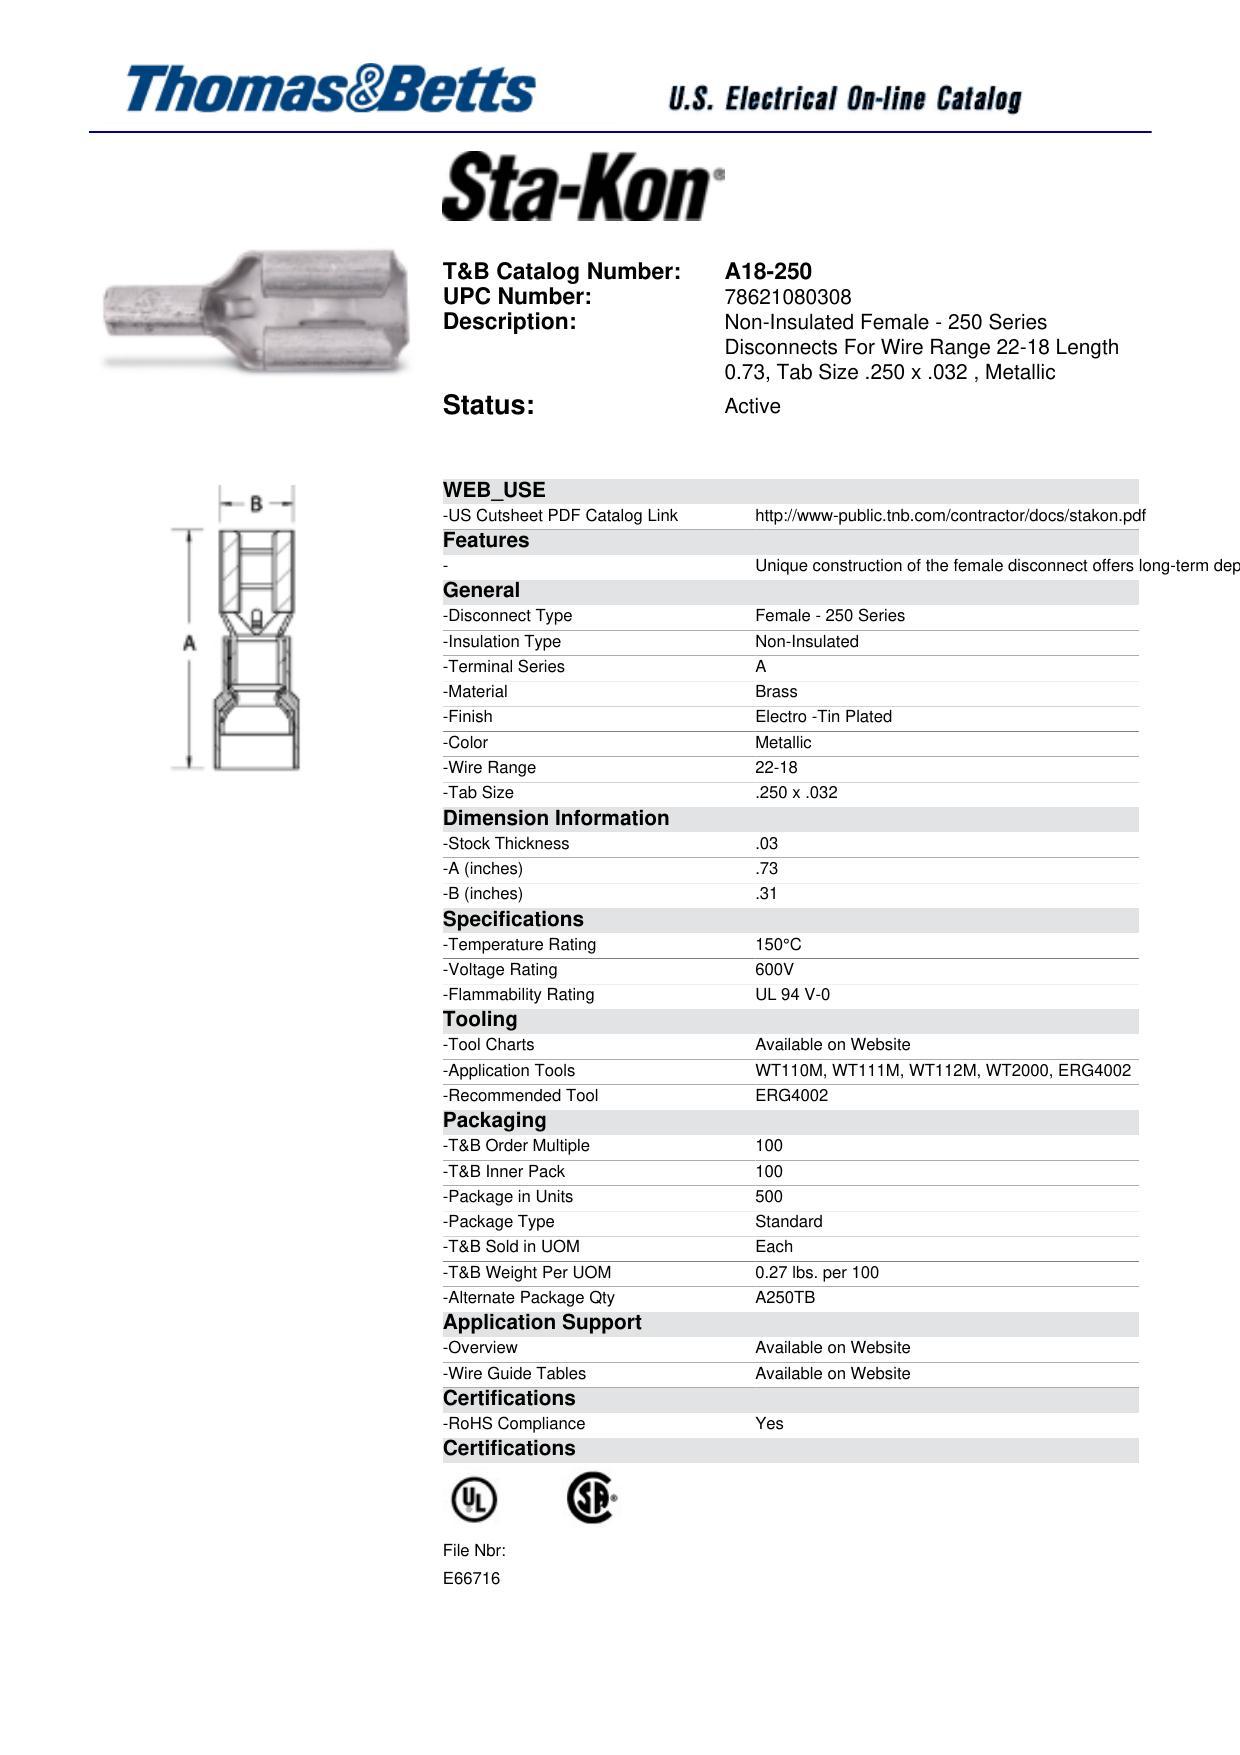 thomasebetts-us-electrical-sta-kon-tb-catalog-number-a18-250.pdf